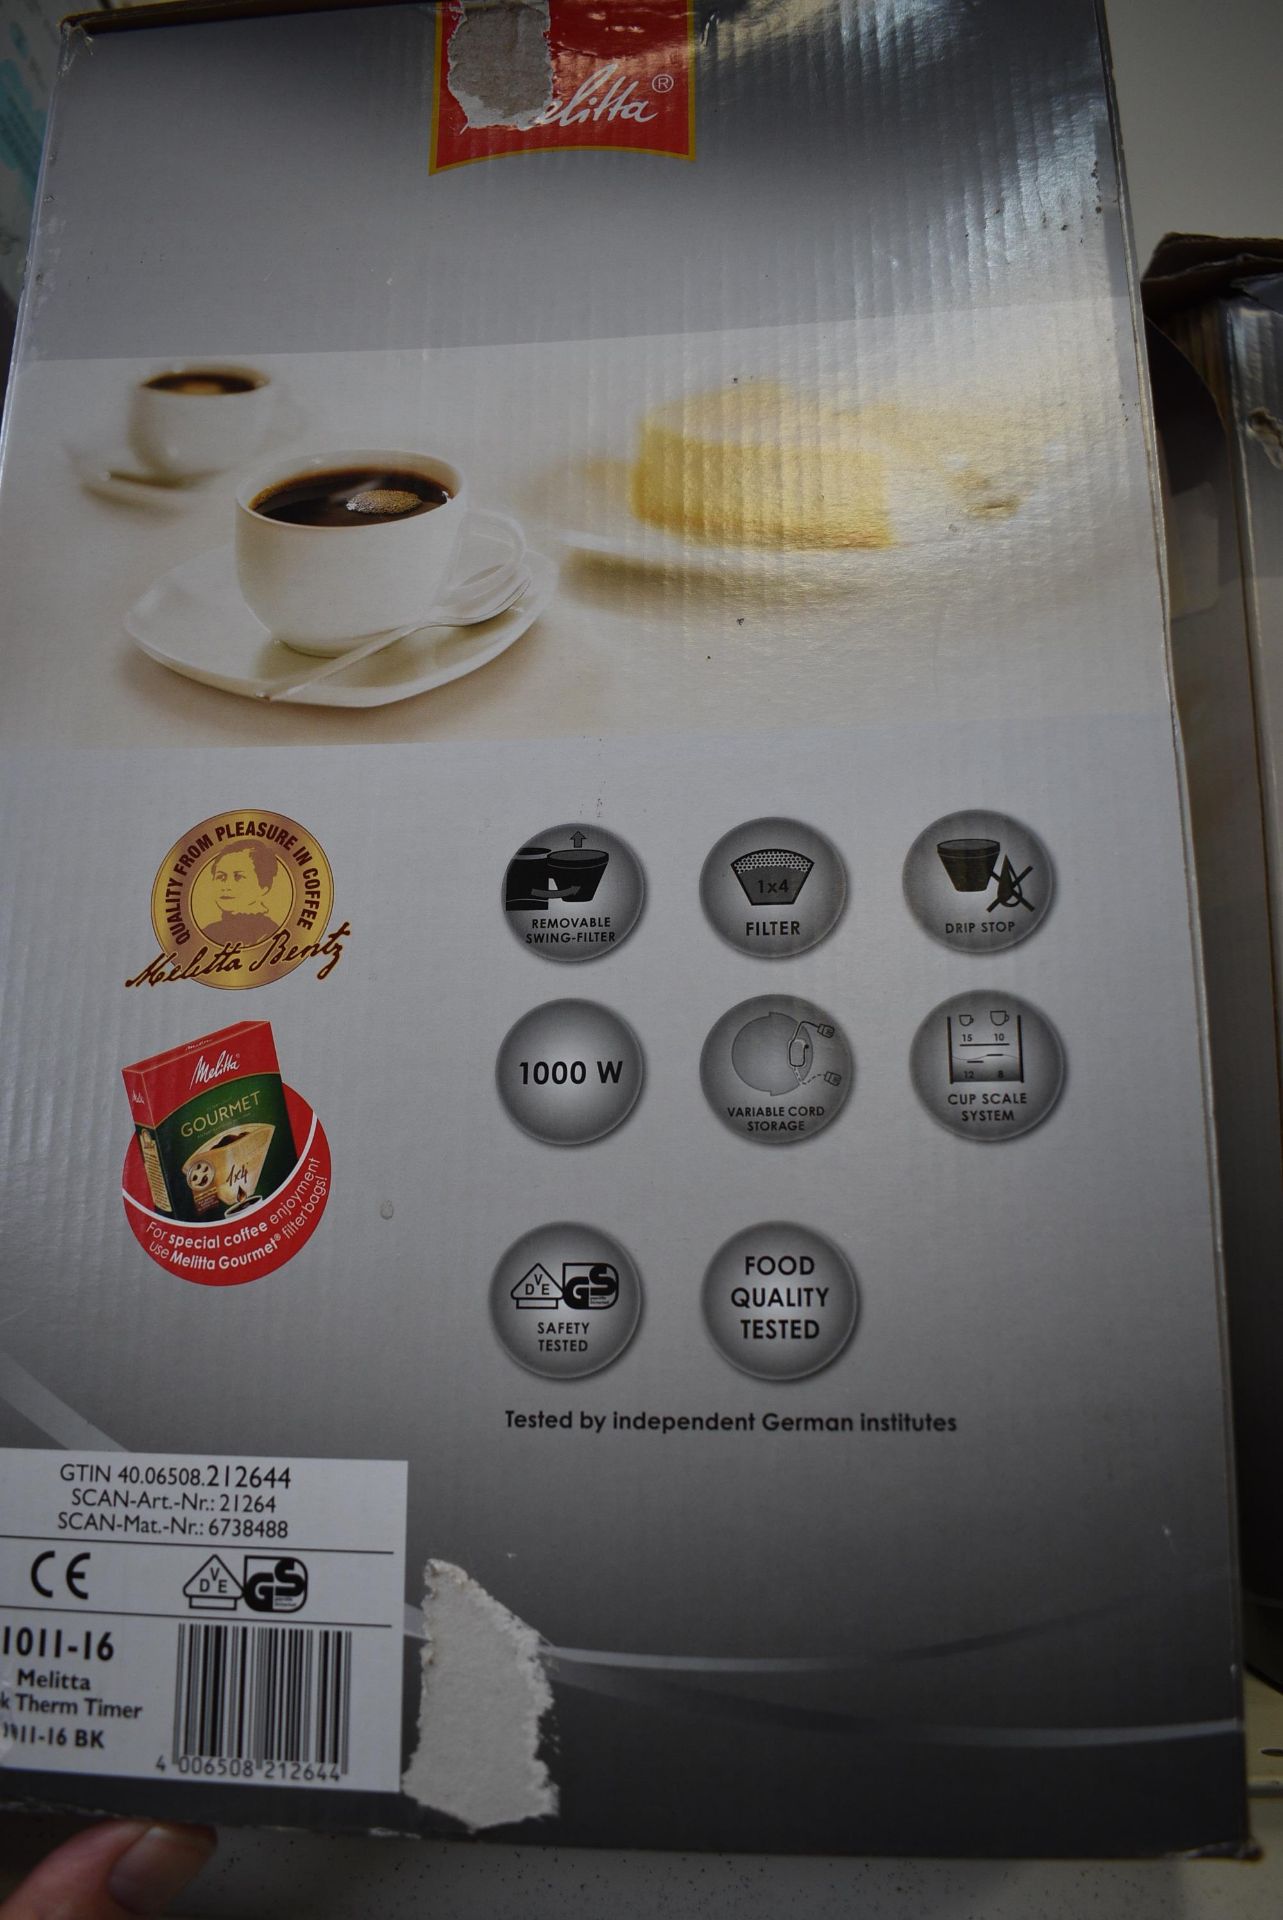 Melita Coffee Machine - Image 2 of 2